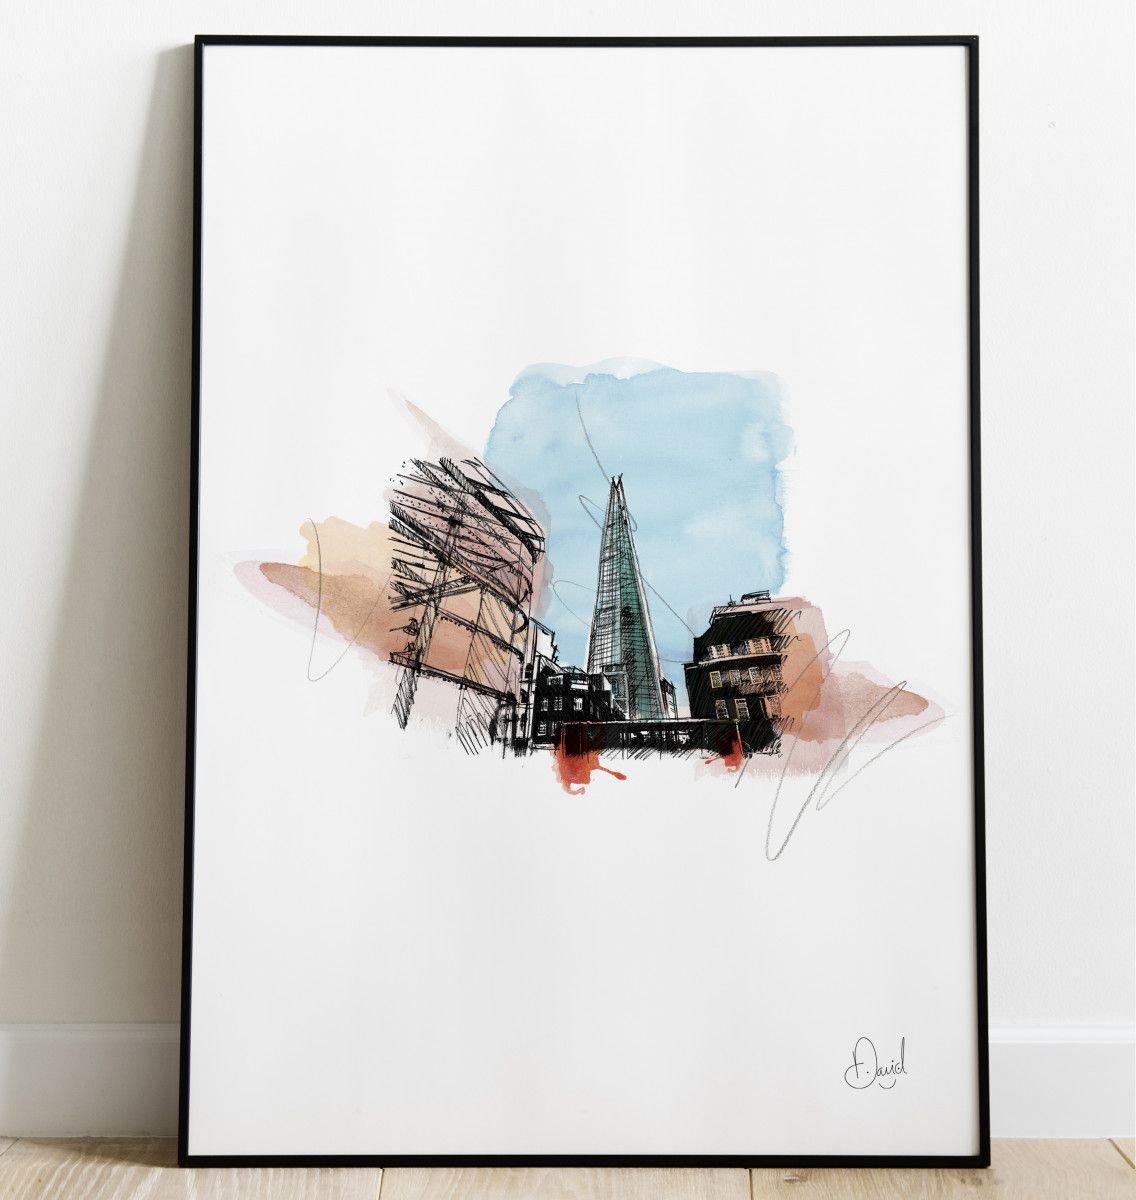 London – The Shard art print